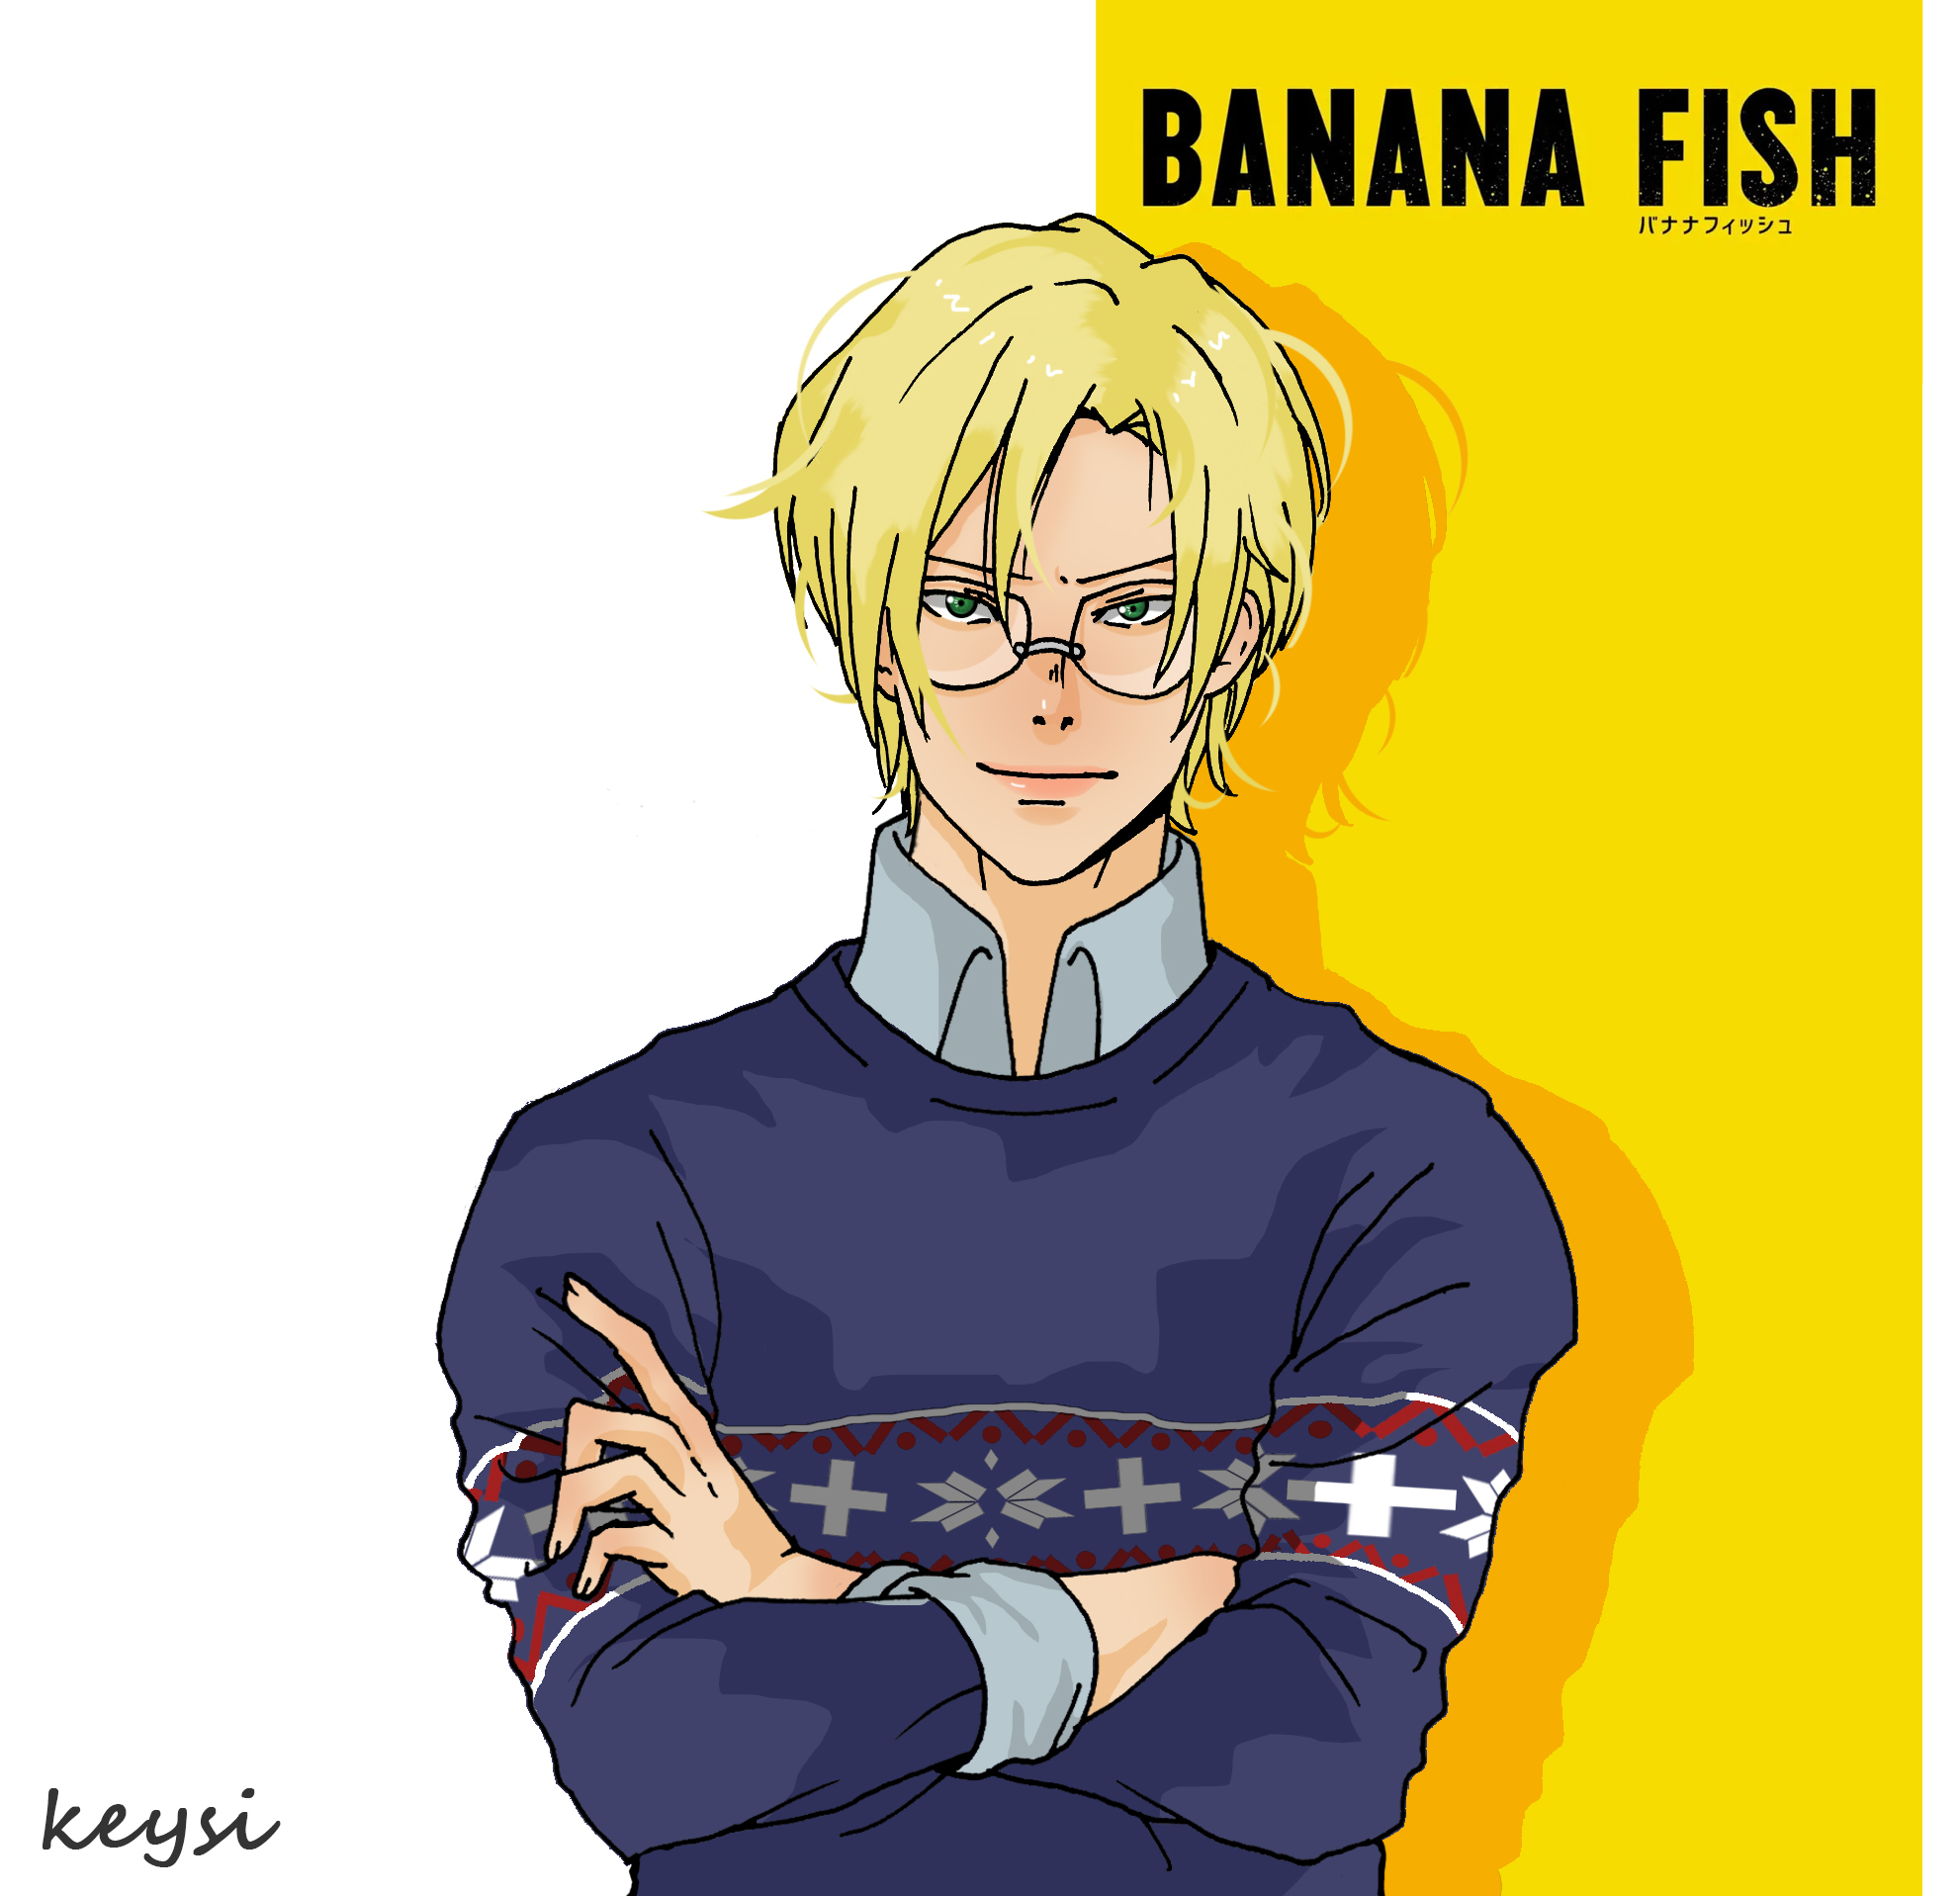 Banana Fish Art